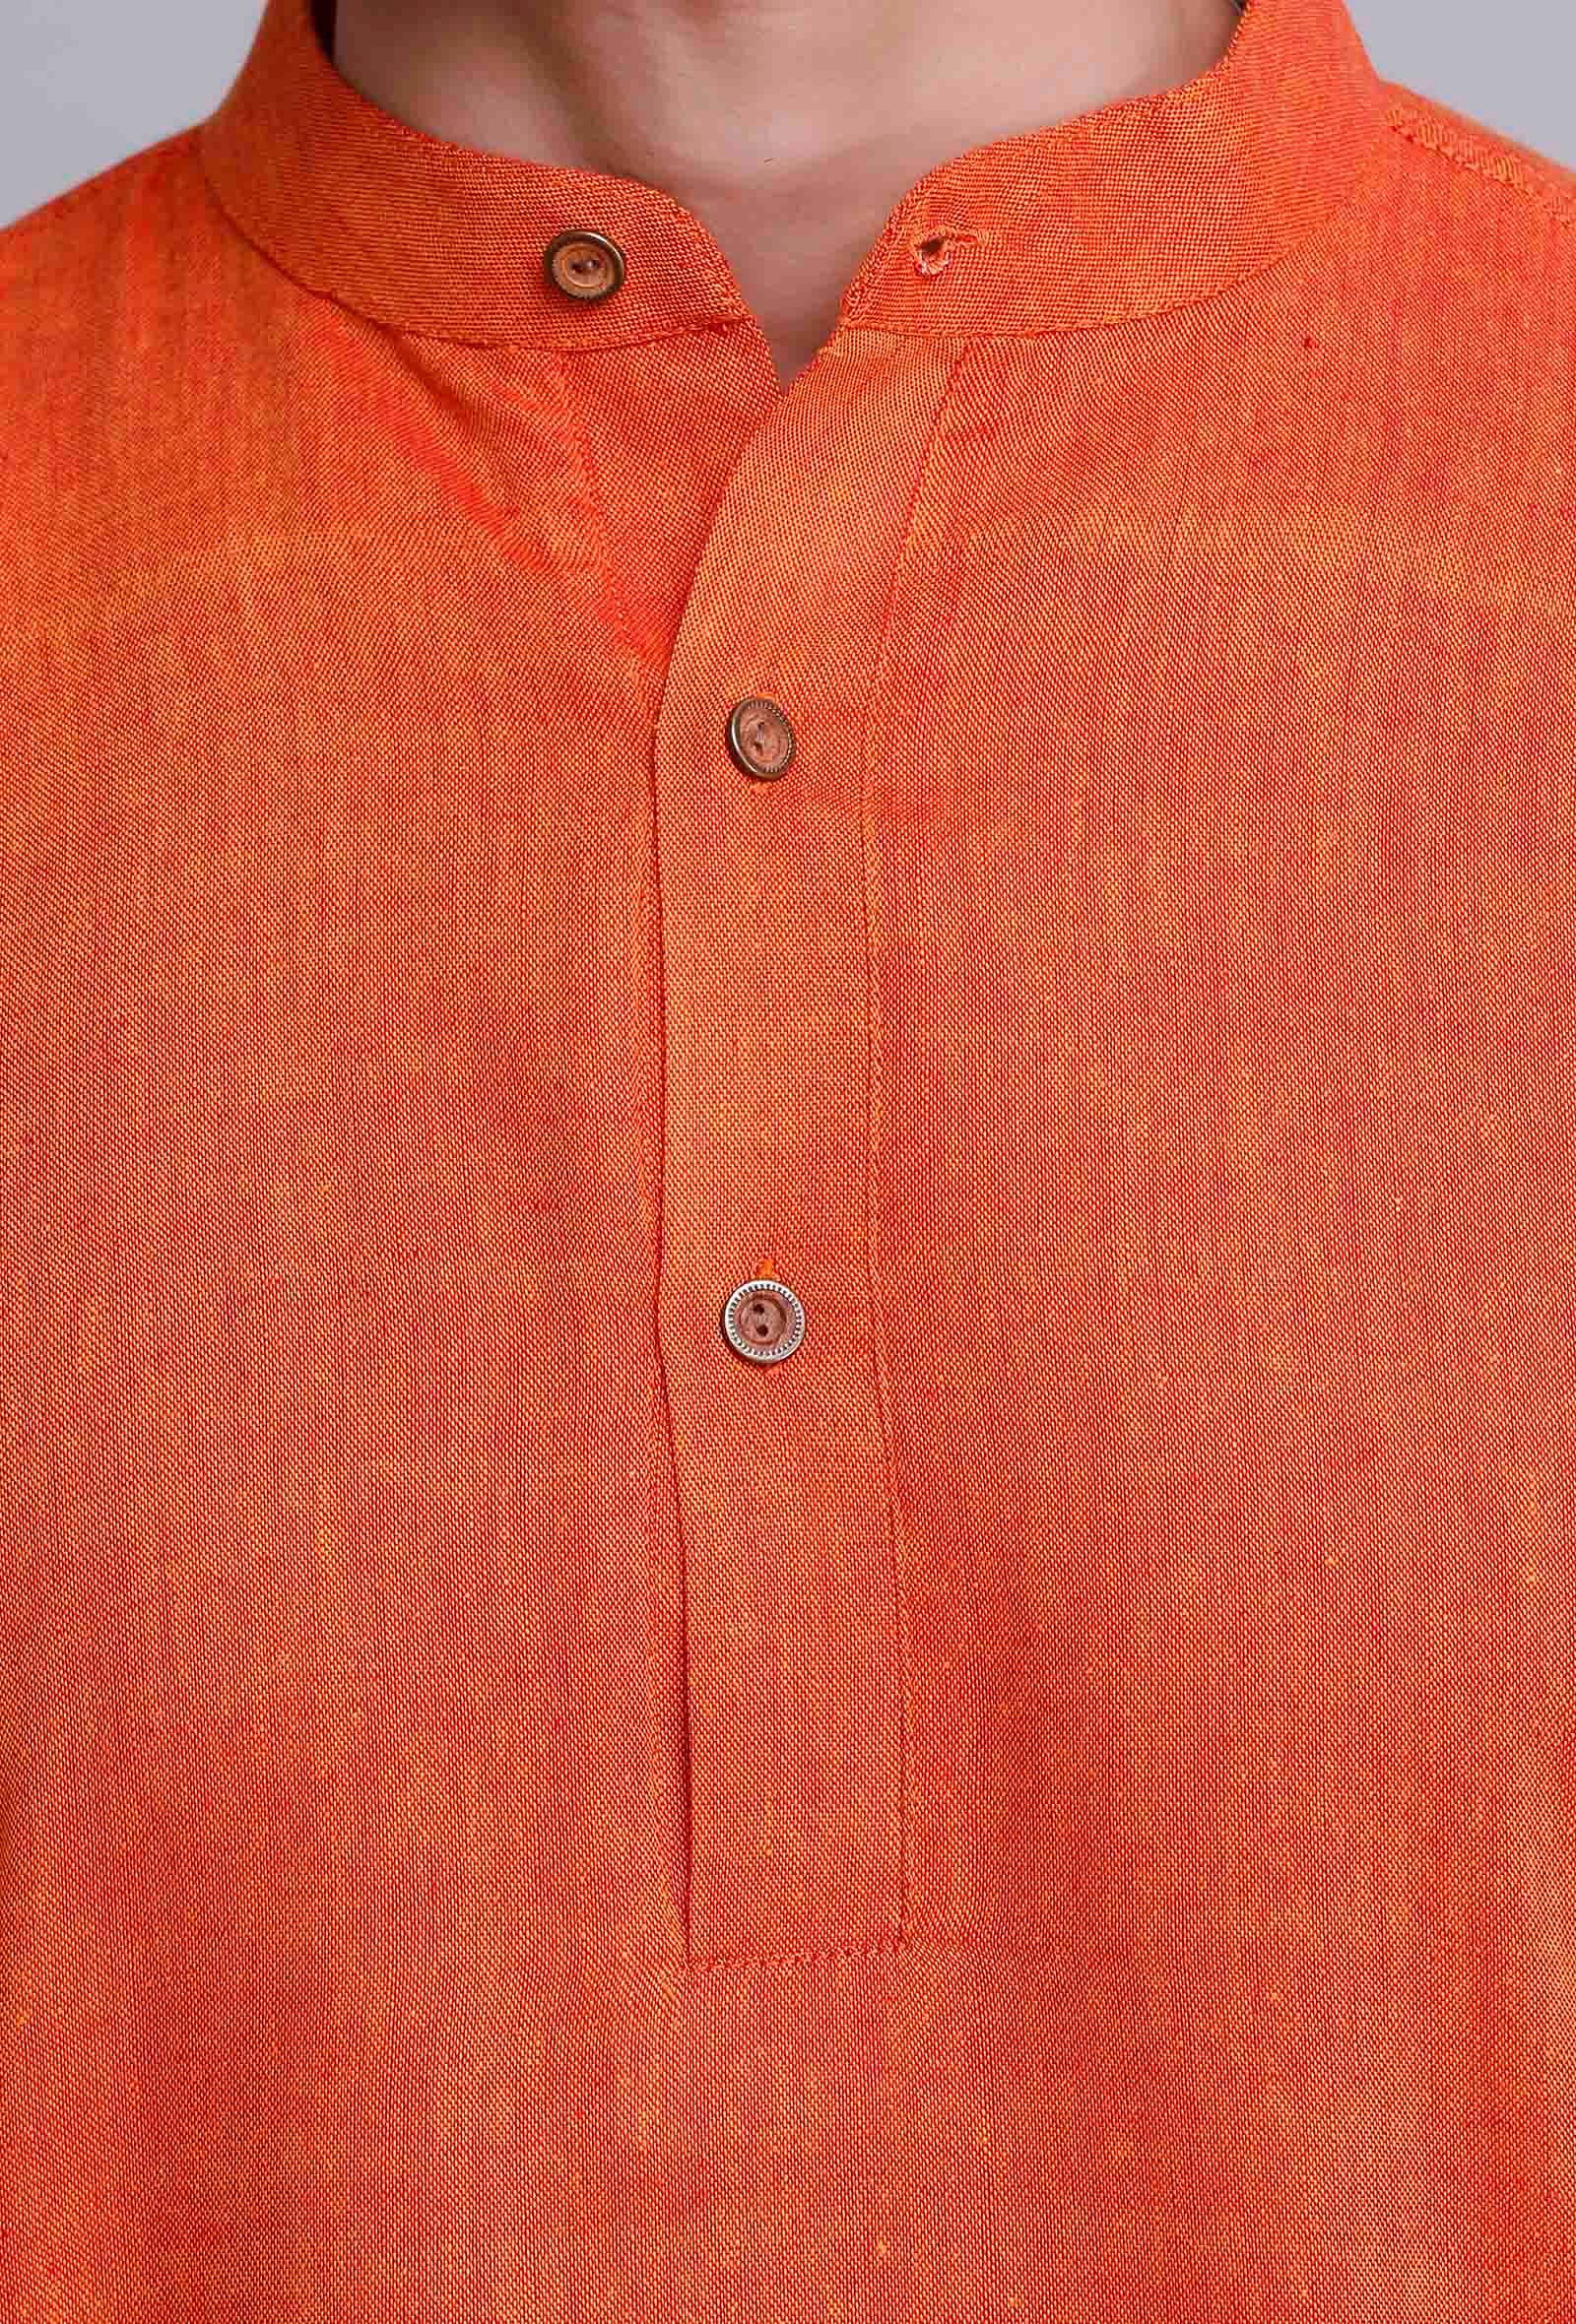 Set of 2: Tangerine Orange Cotton Kurta and Pajama